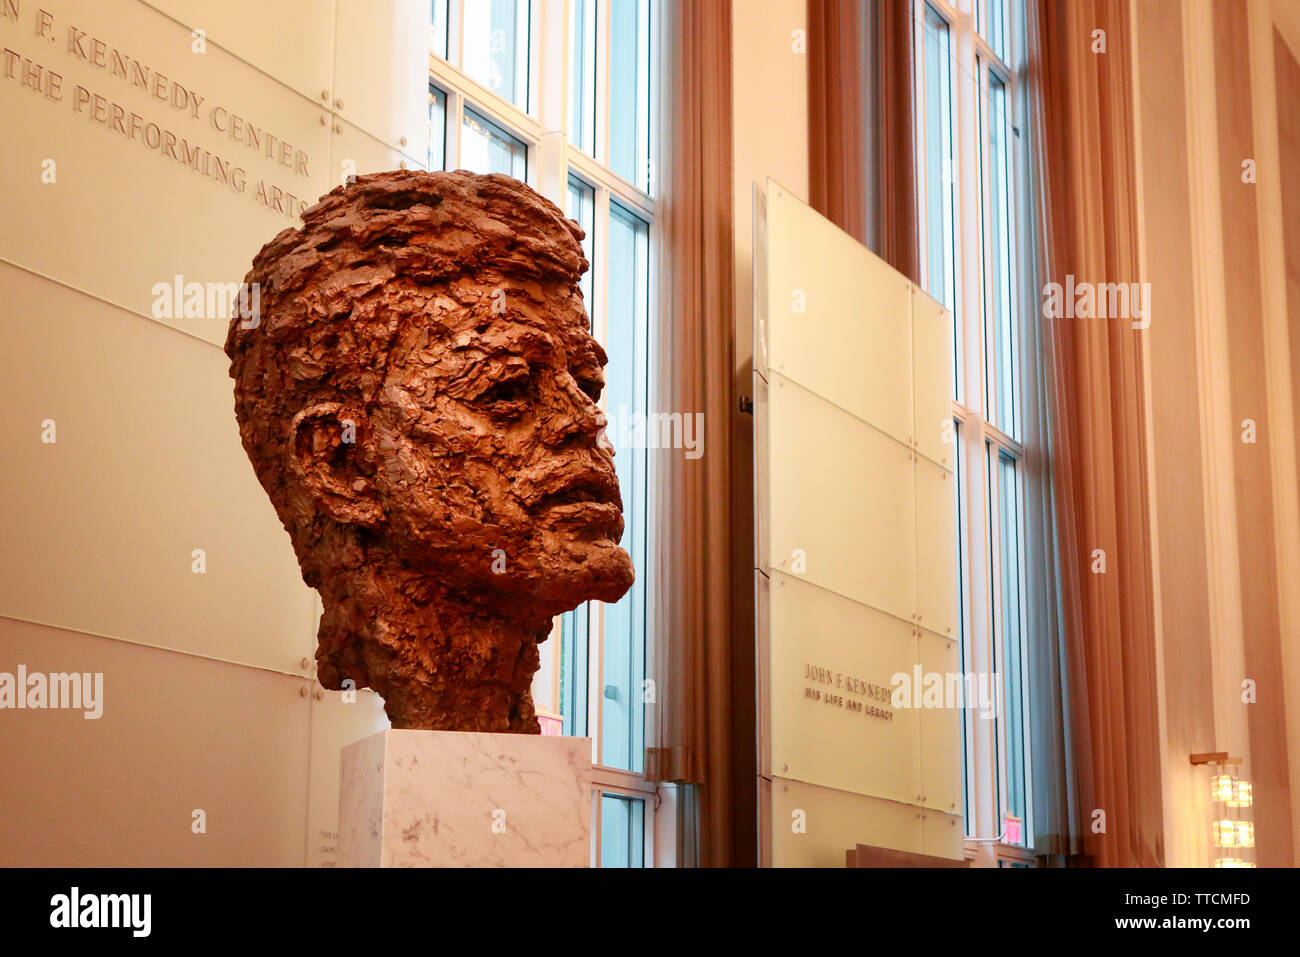 Le 30 mai 2019. Washington, DC. Le John F. Kennedy Center for the Performing Arts. Buste de John F. Kennedy par Robert Berks Banque D'Images